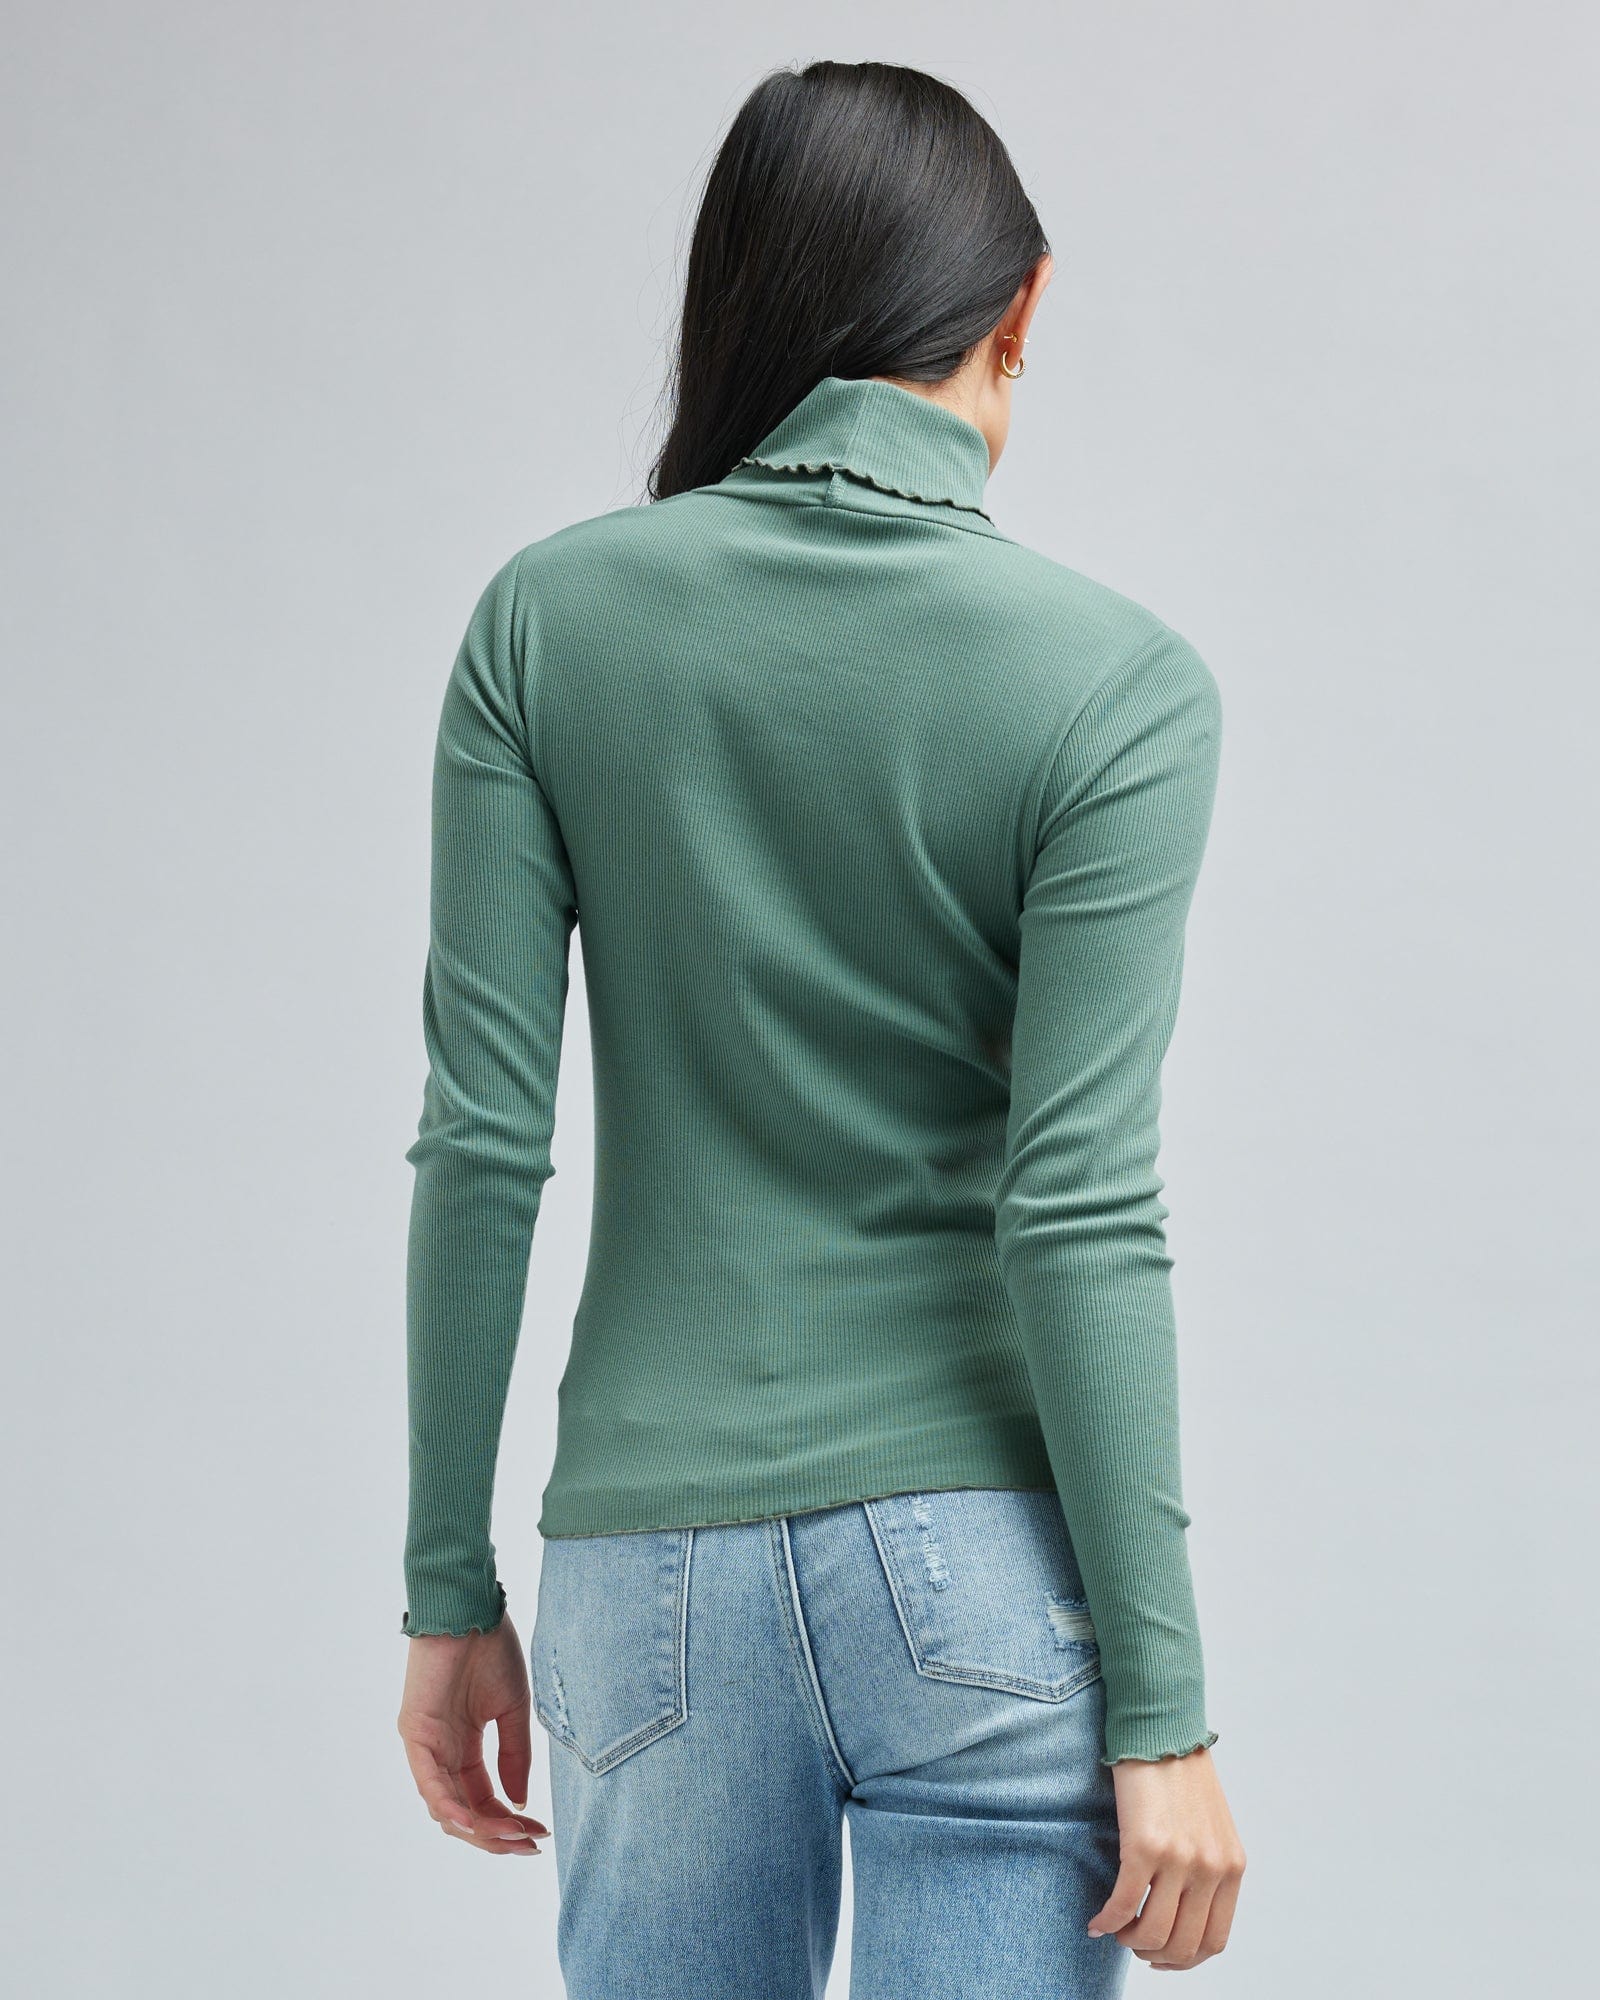 Woman in a long sleeve, green, turtleneck t-shirt